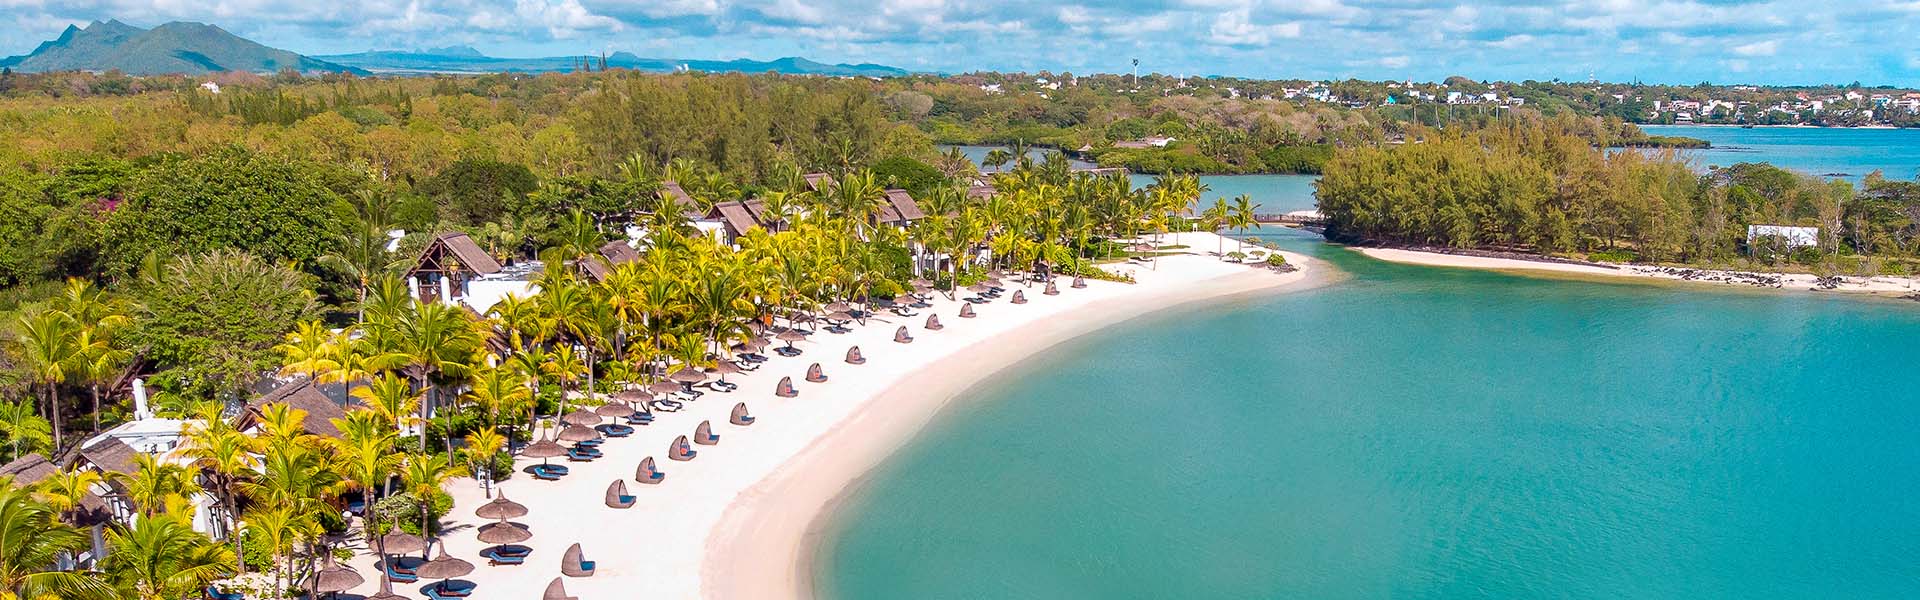 5* Shangri-La Le Touessrok Resort - Mauritius